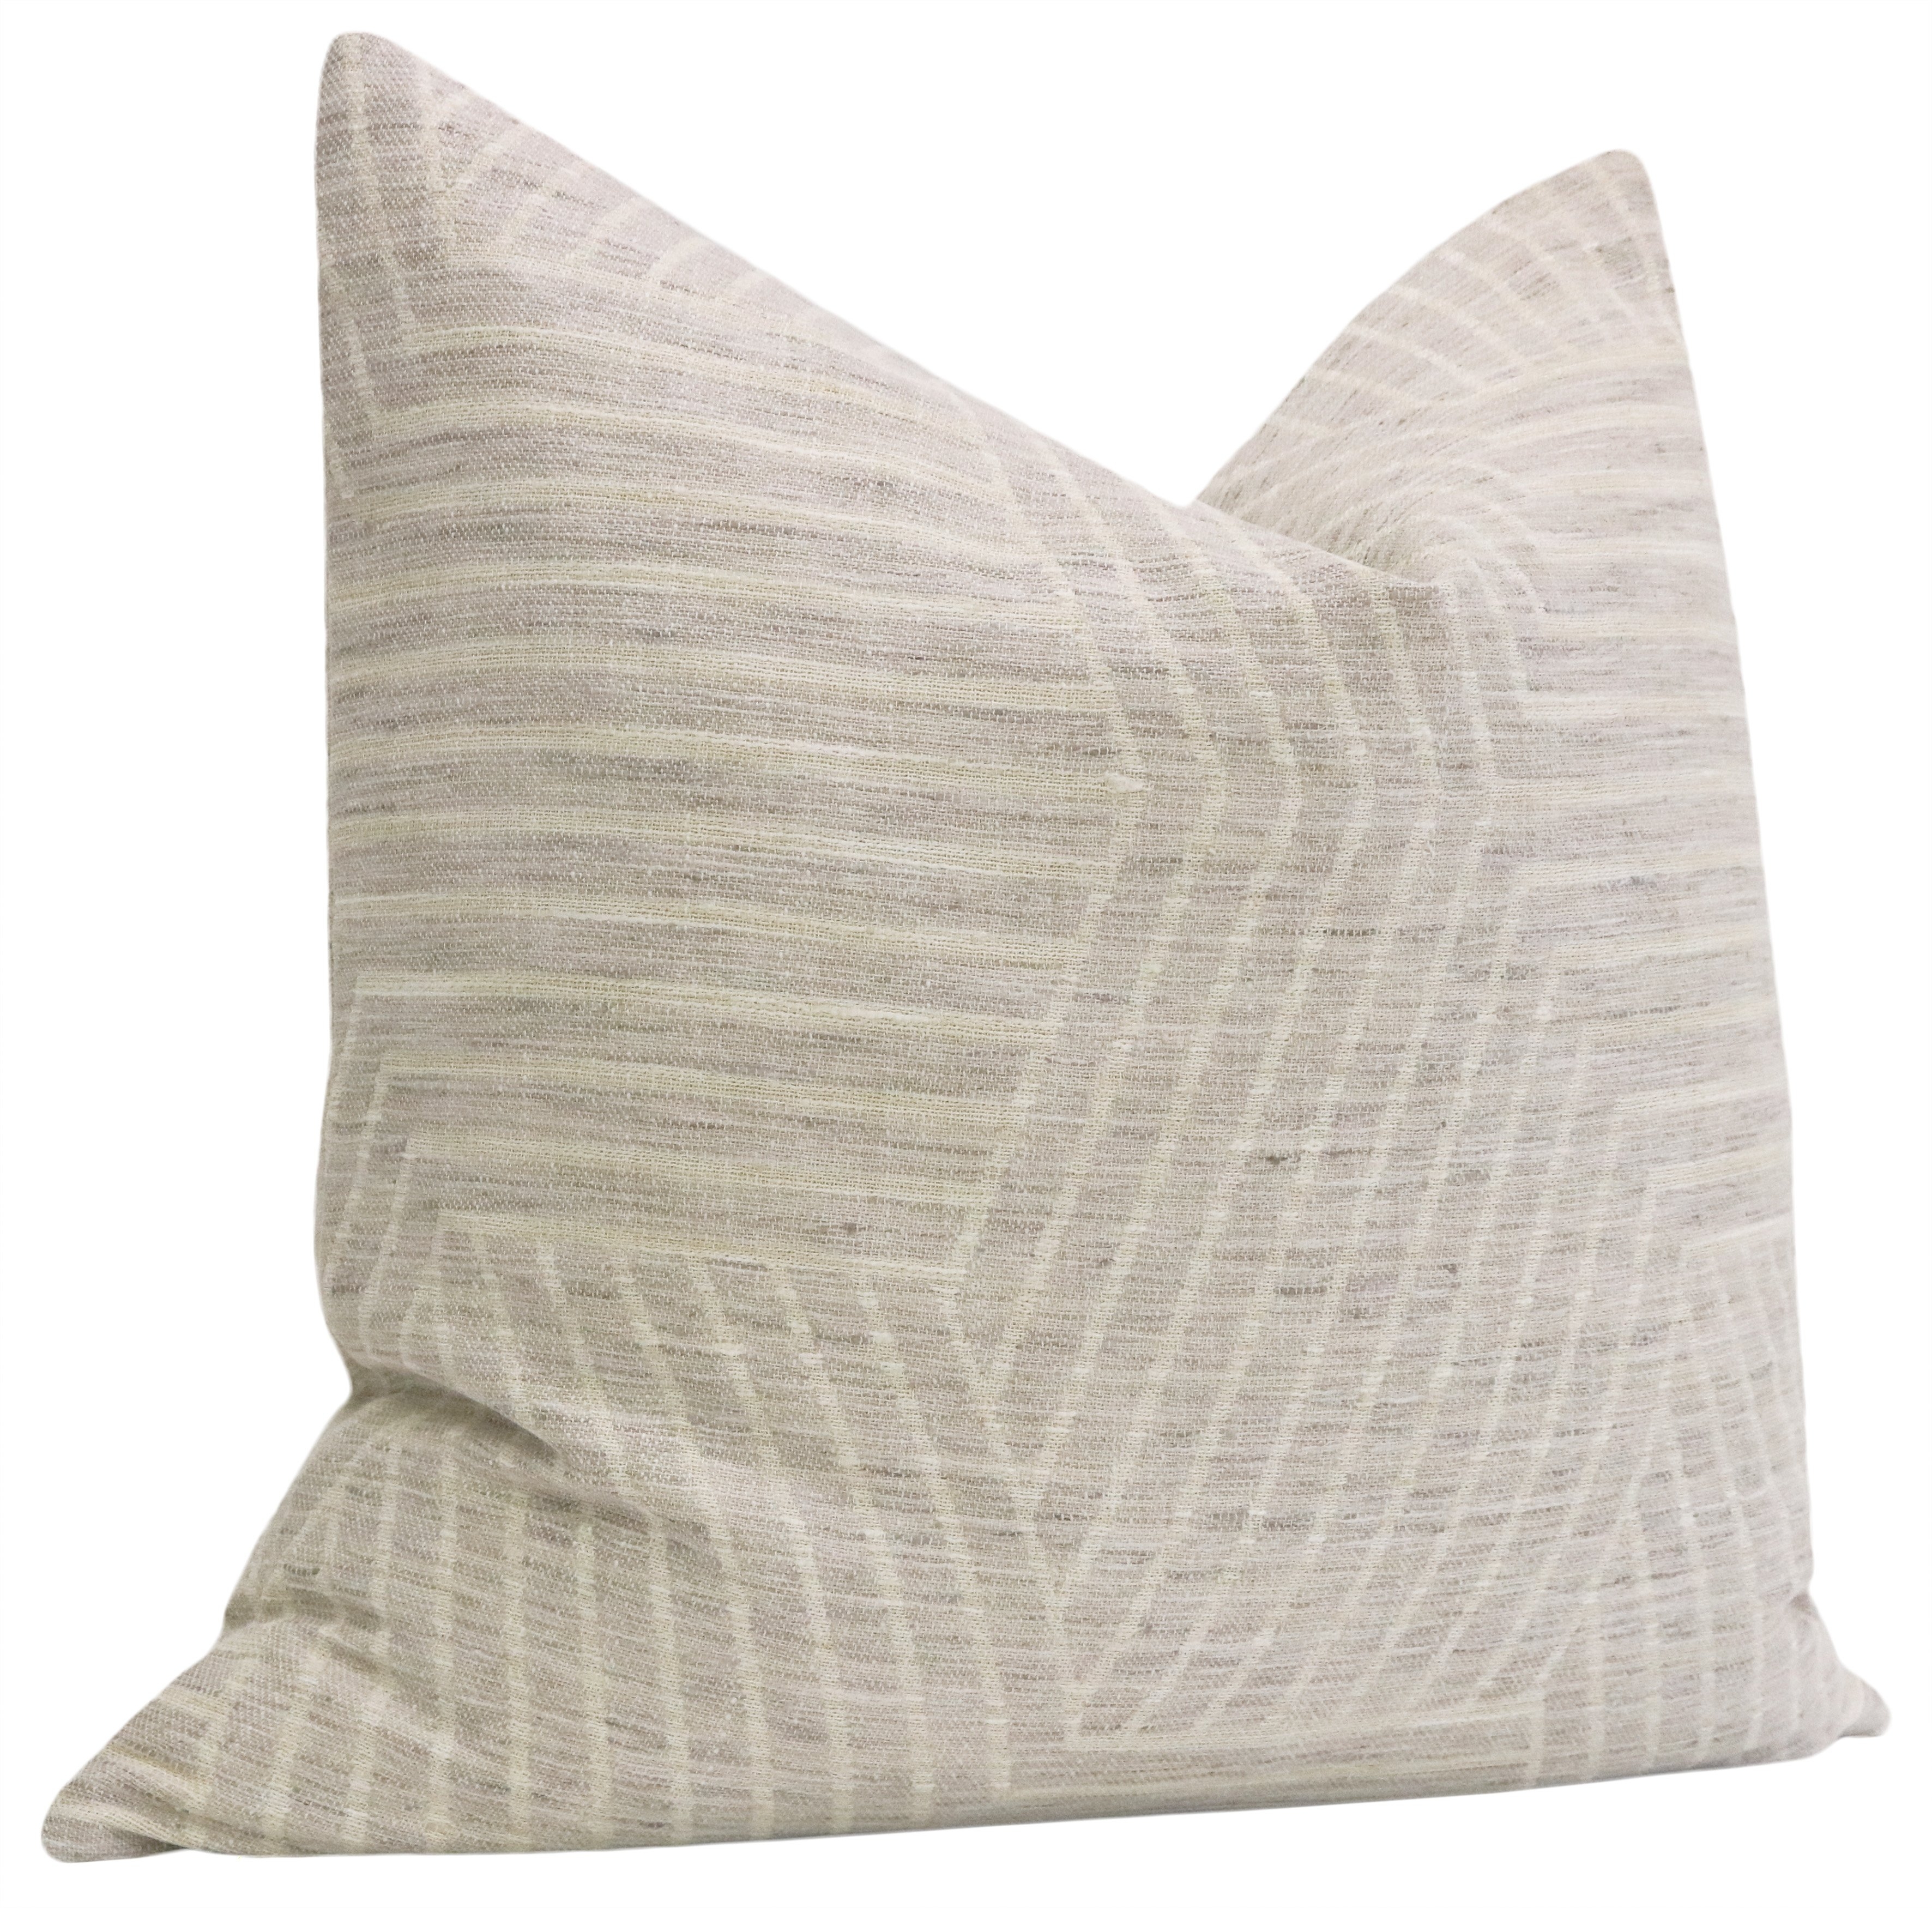 Labyrinth Linen Pillow, Oyster, 18" x 18" - Image 1